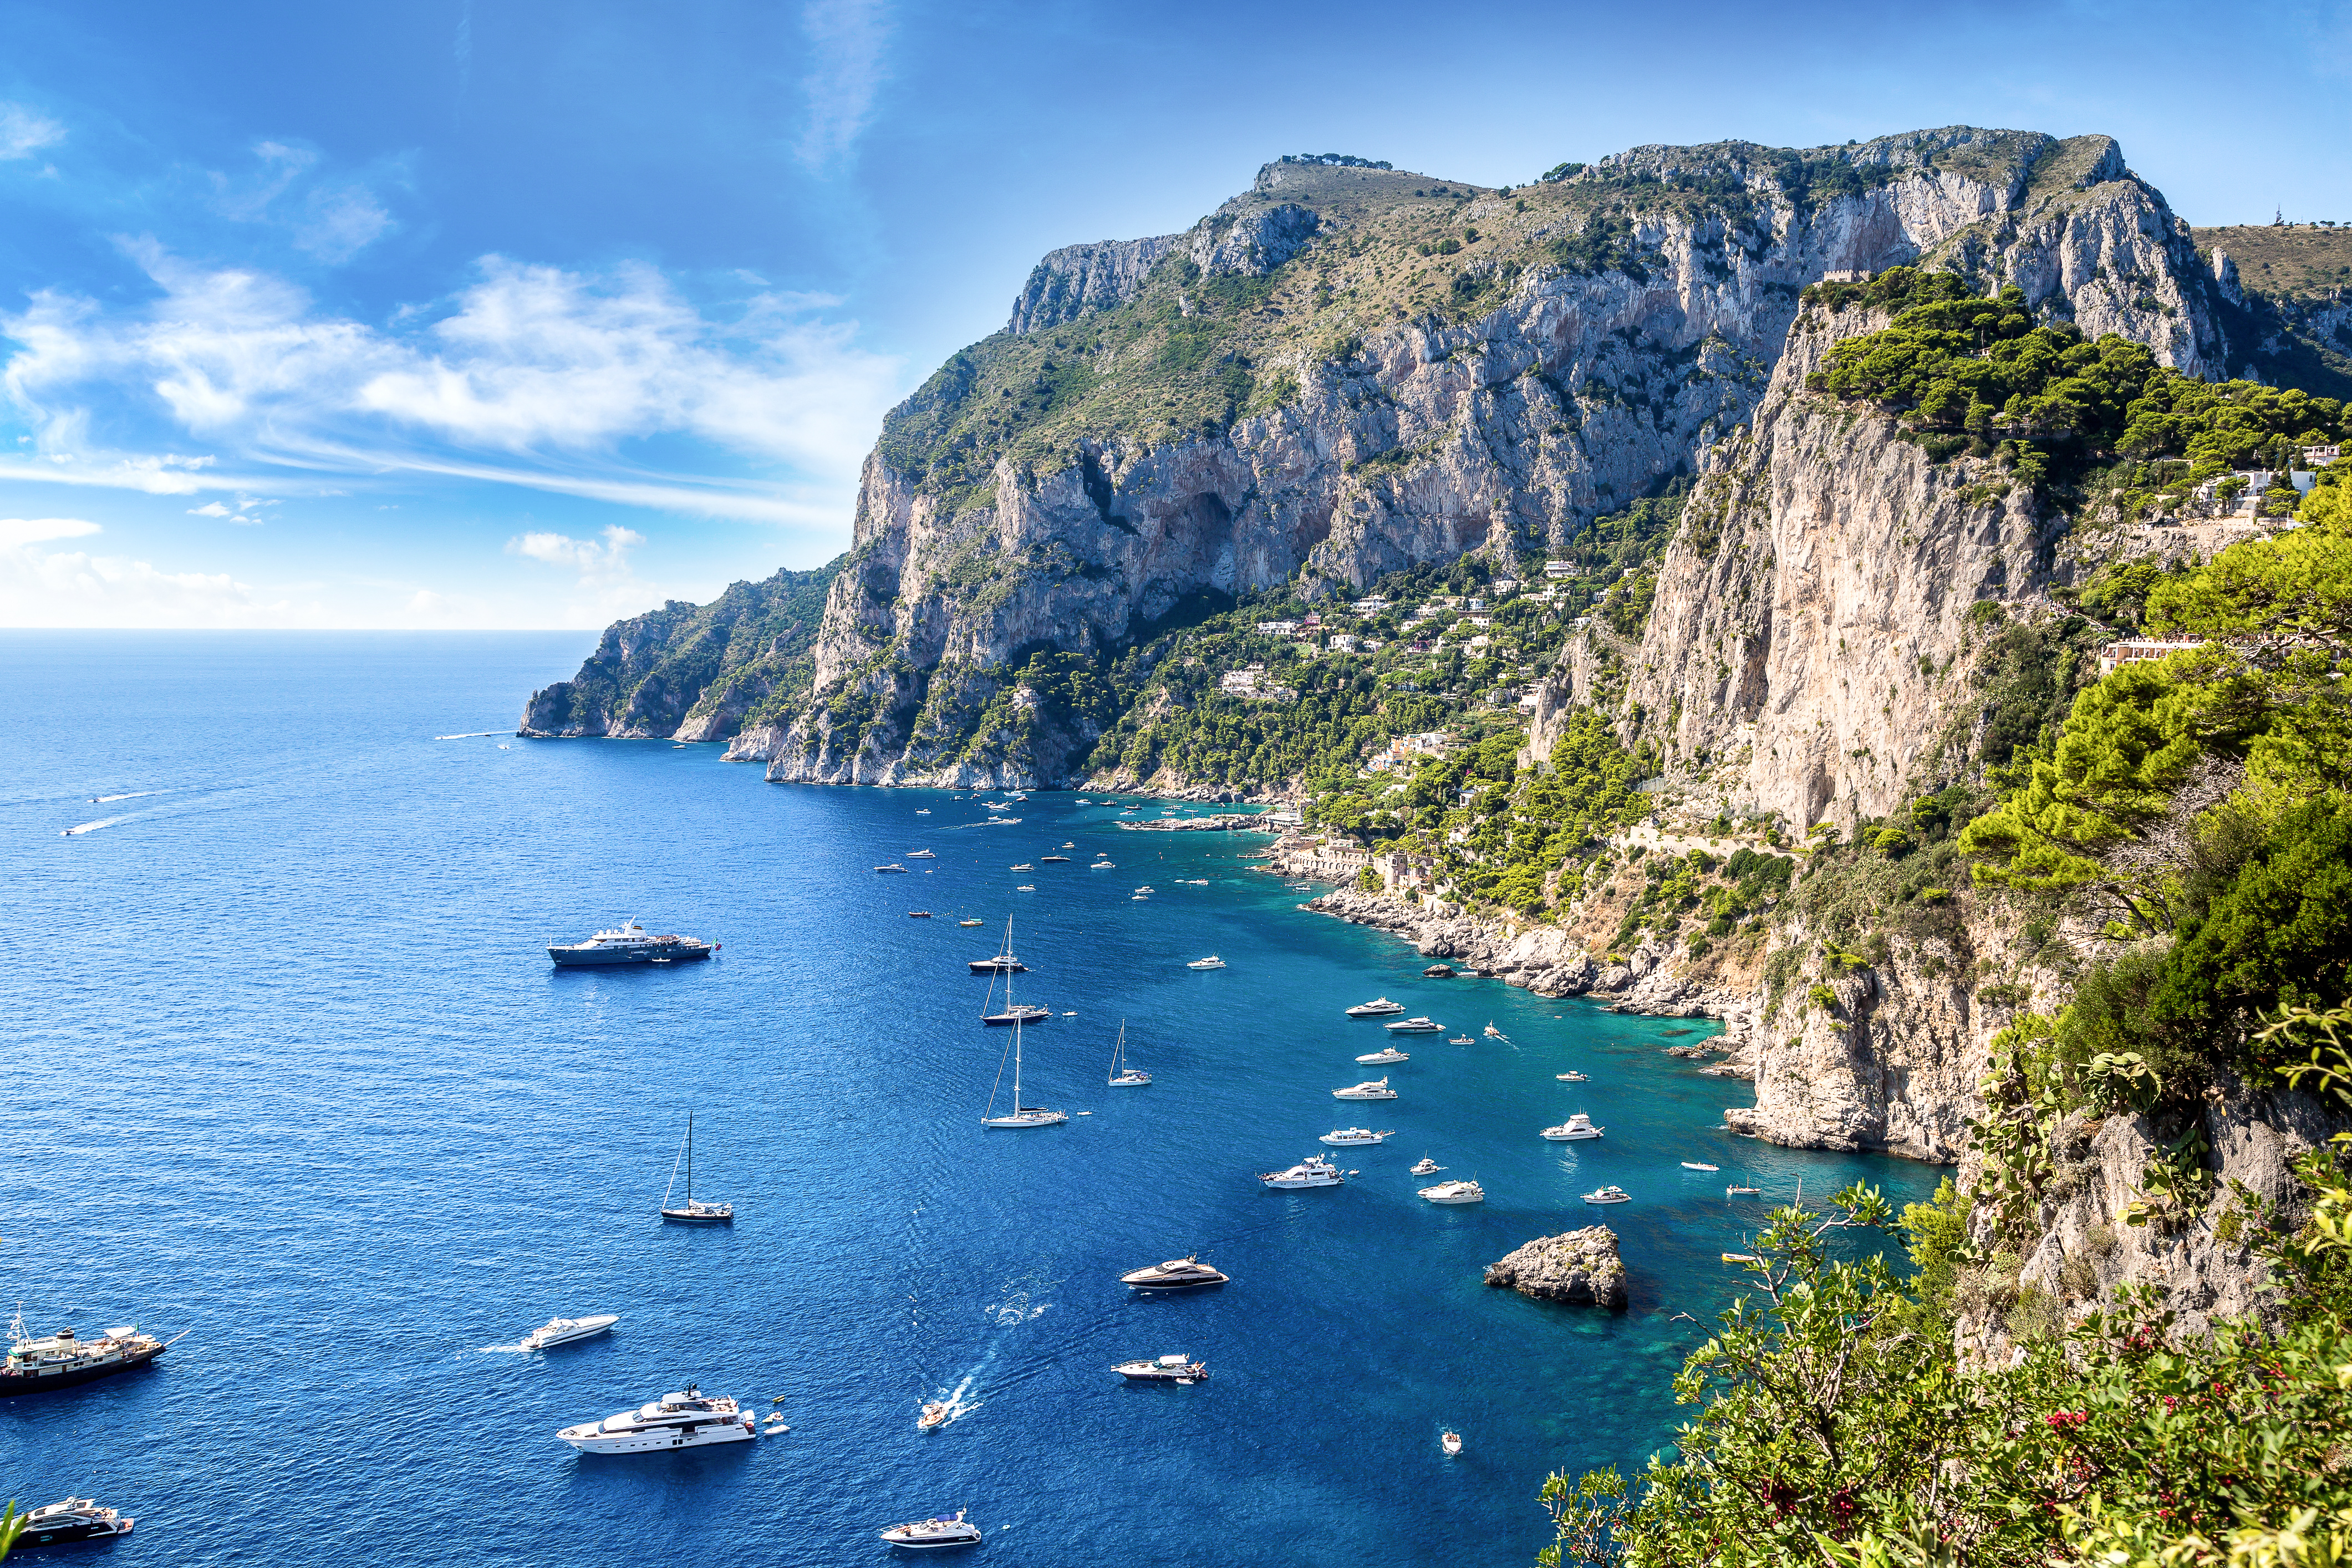 View of the Capri Island